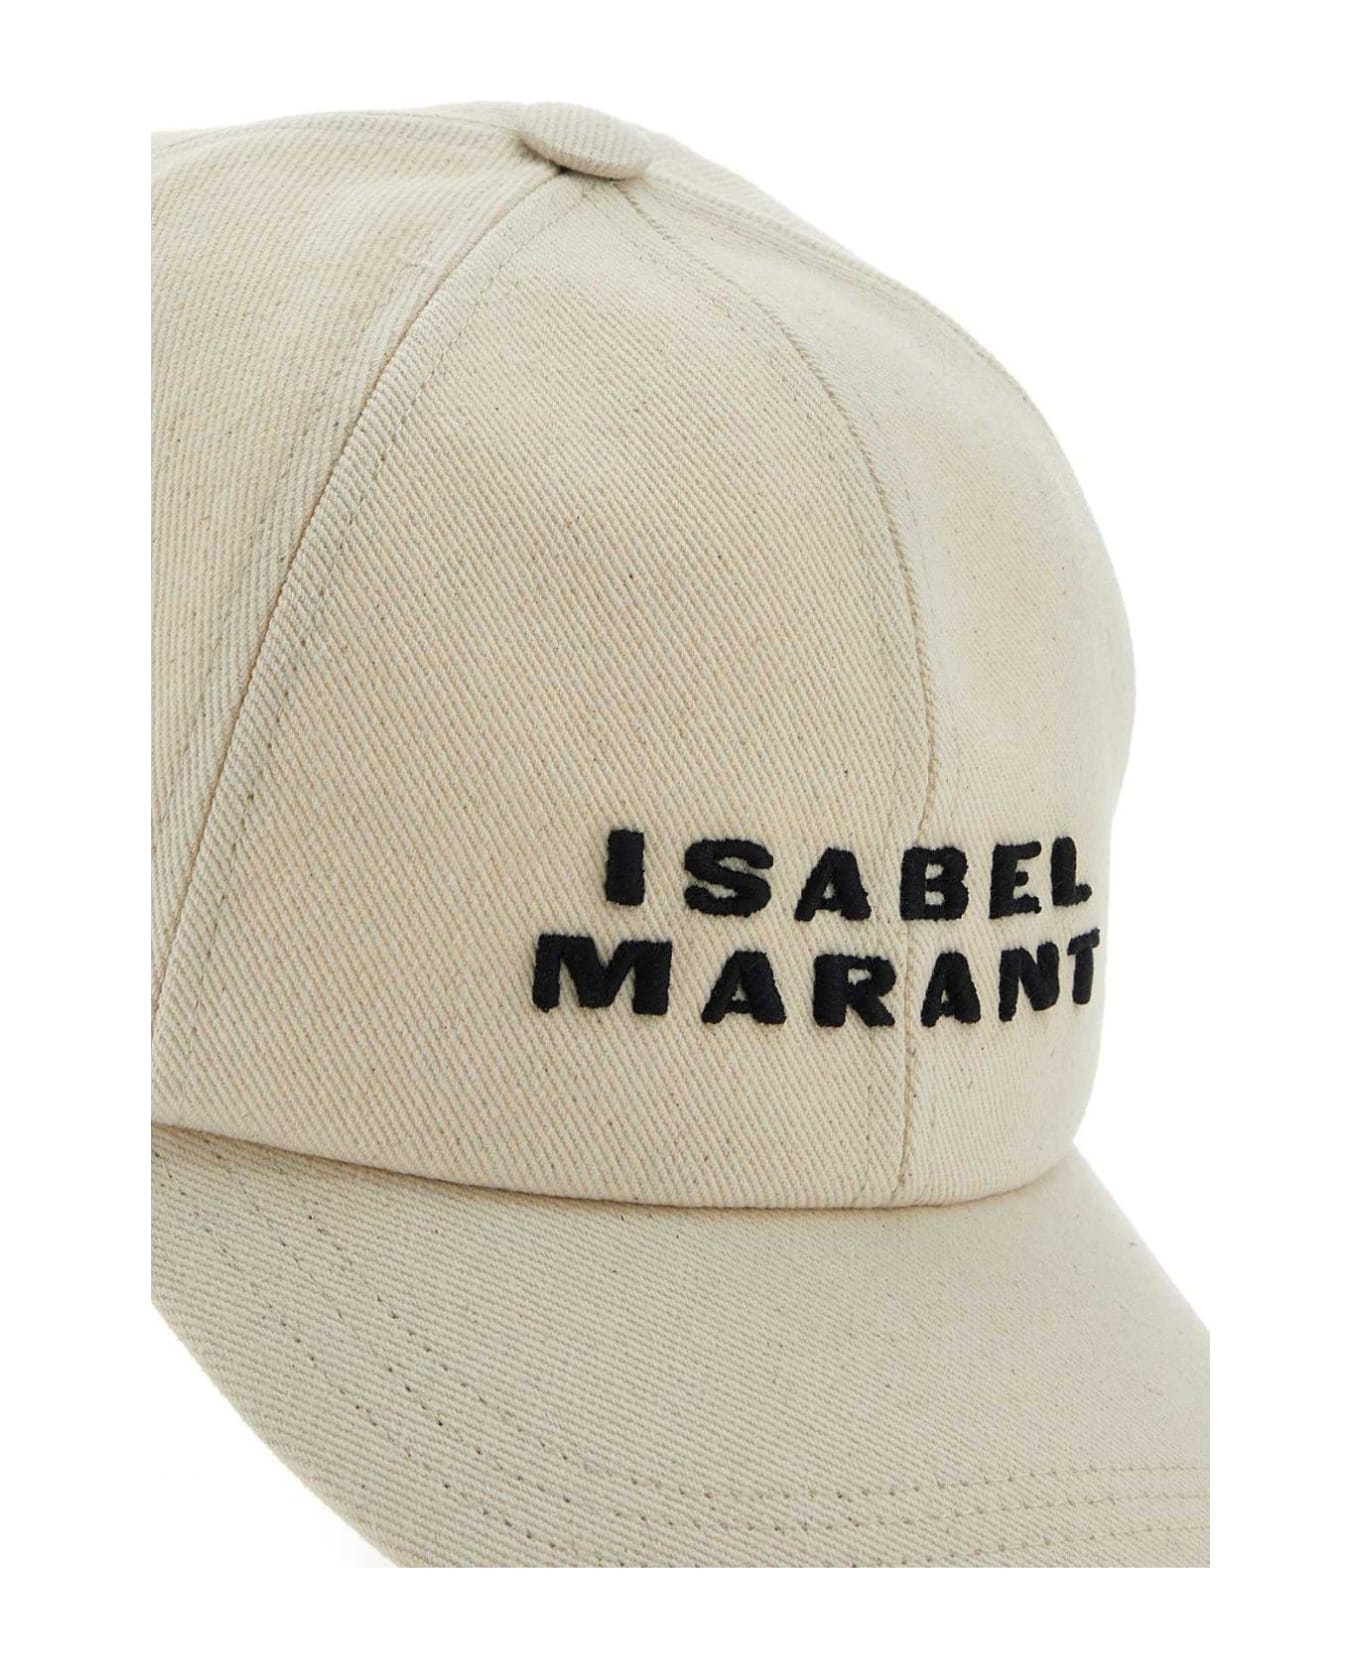 Isabel Marant Logo Embroidered Baseball Cap - Ecbk Ecru Black